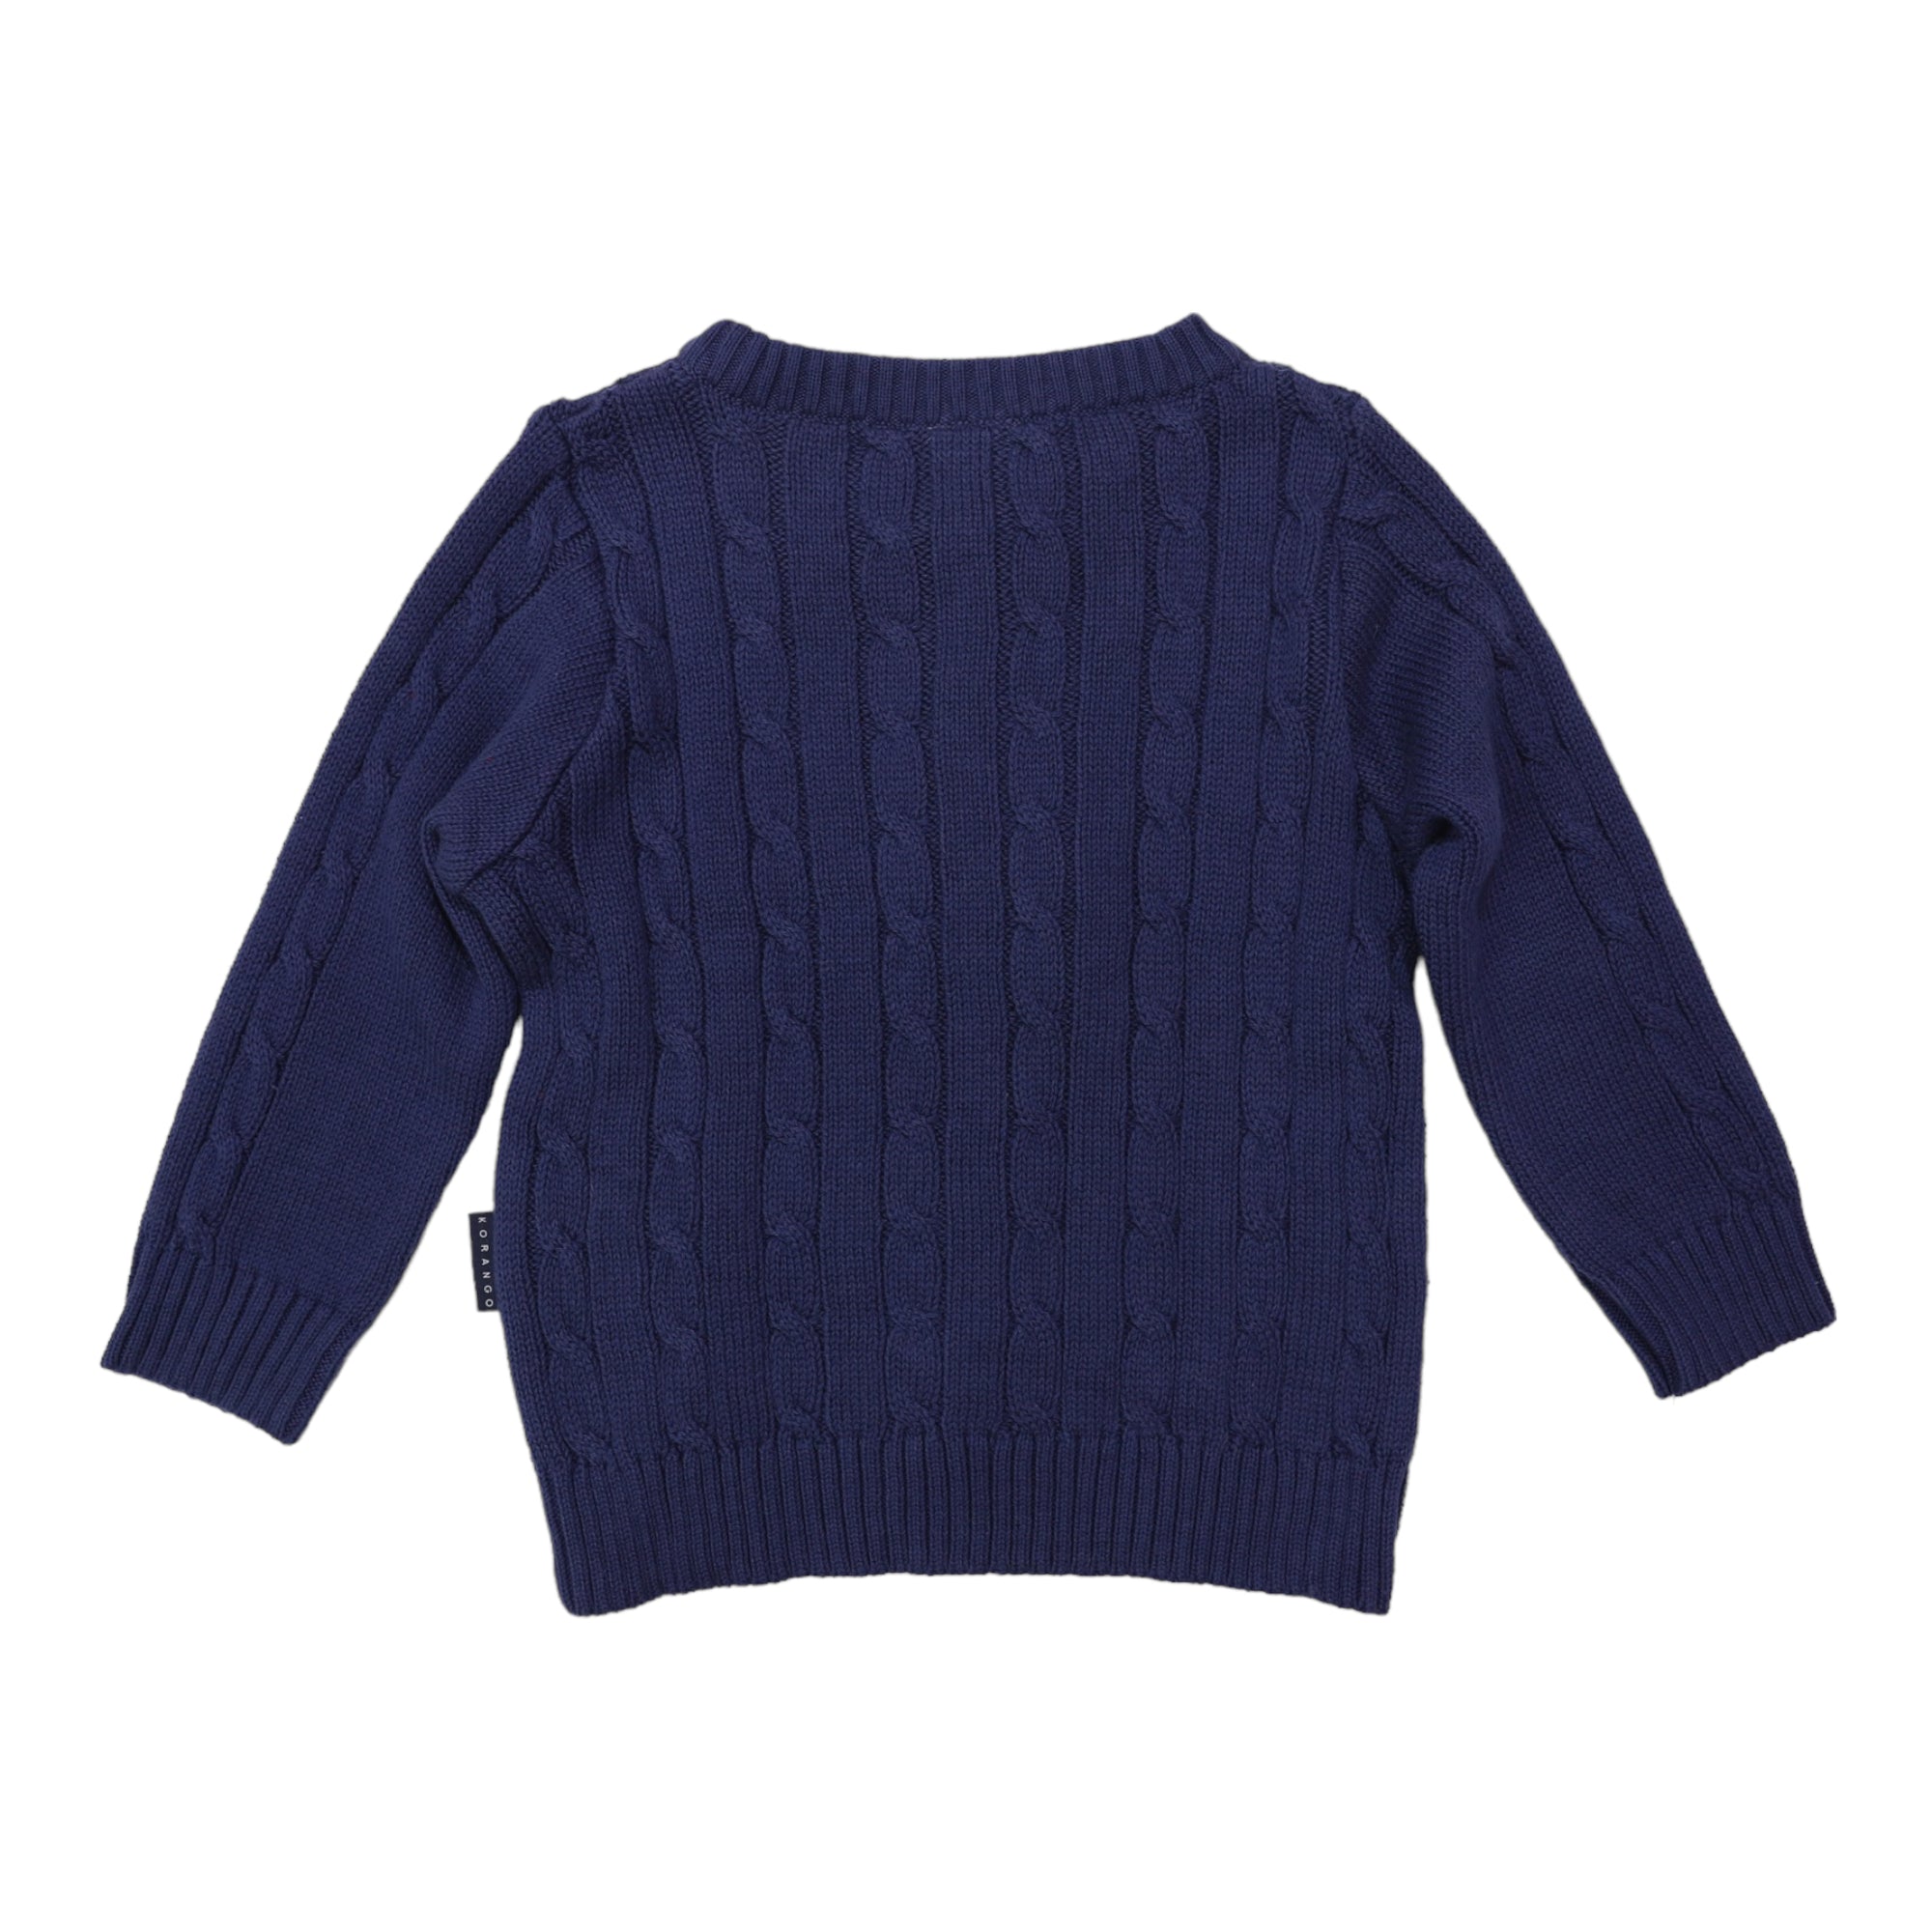 Mill & Hide - Korango - Textured Knit Sweater